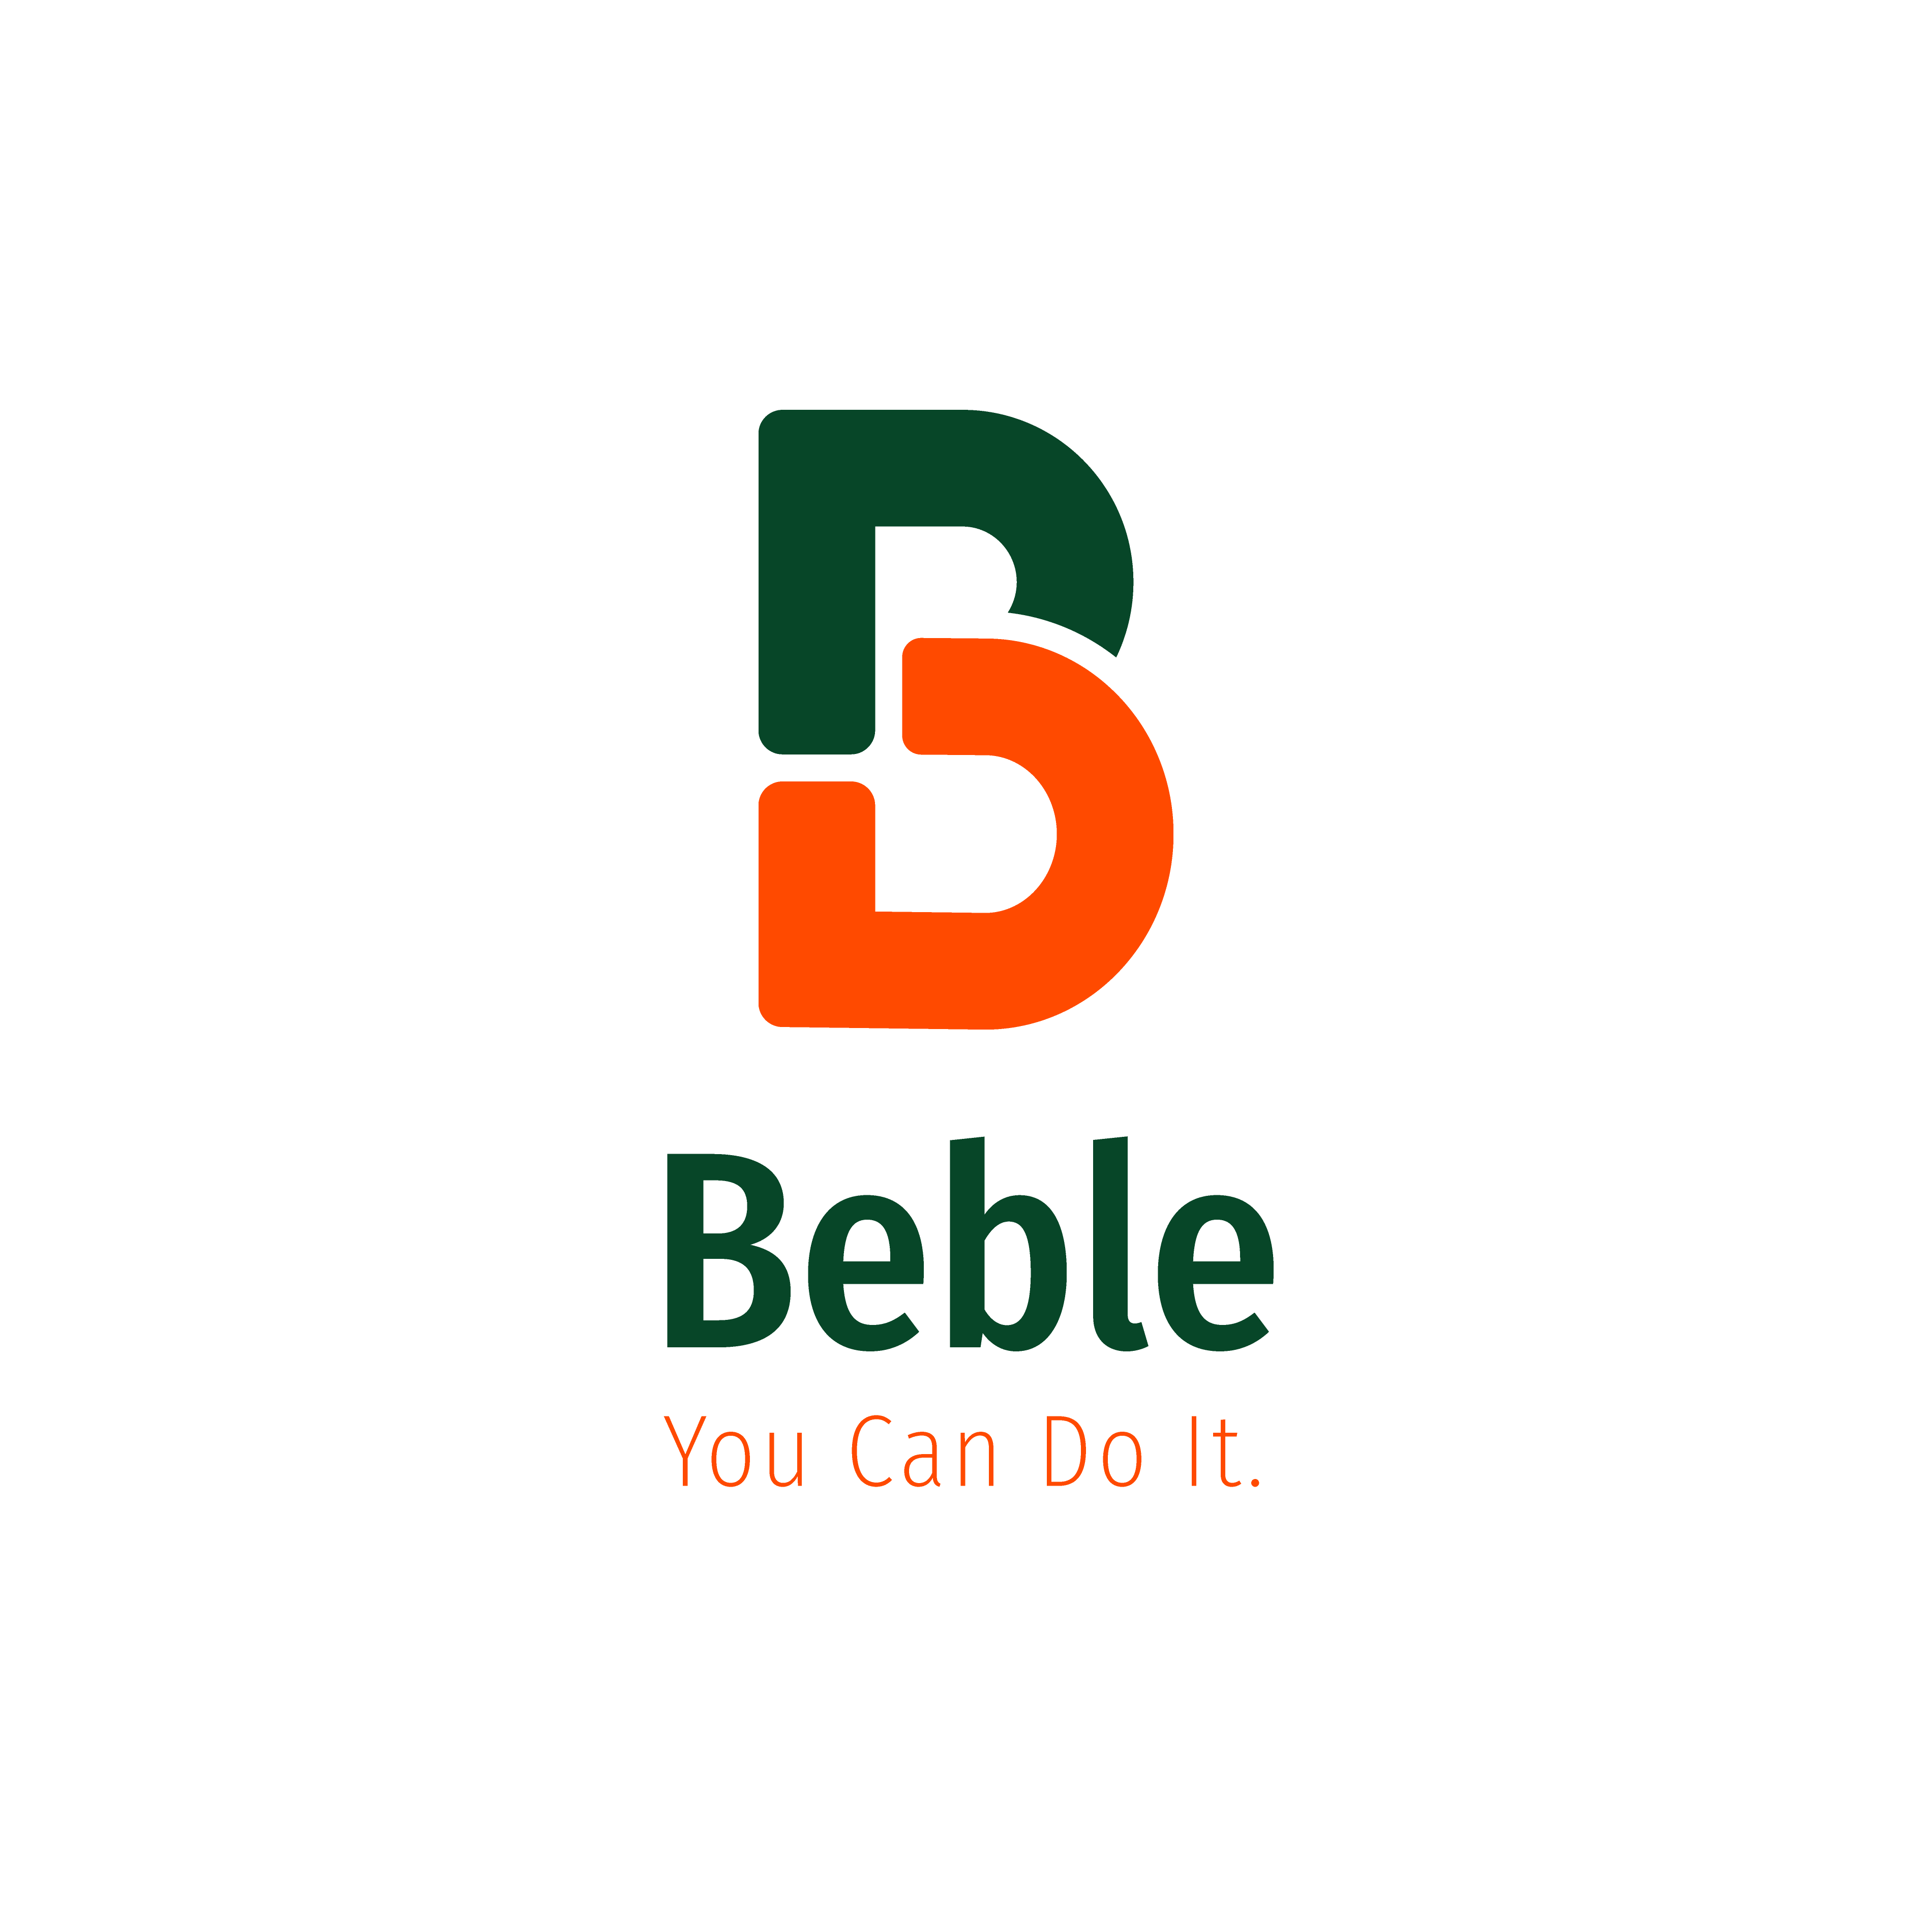 B letter logo for business cover image.